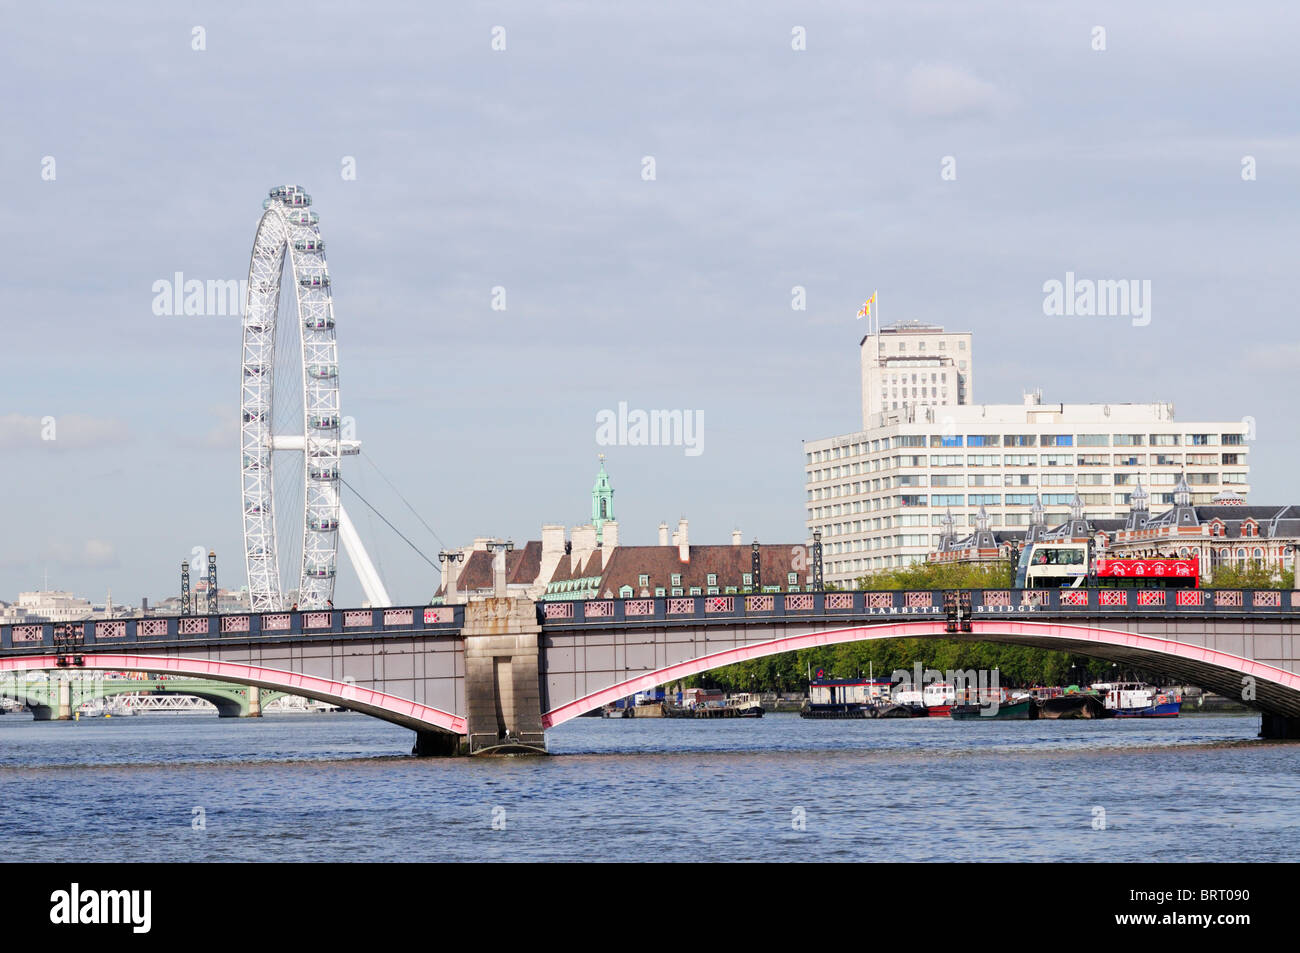 Lambeth Bridge, The London Eye and St Thomas' Hospital, viewed from Millbank Pier, London, England, UK Stock Photo